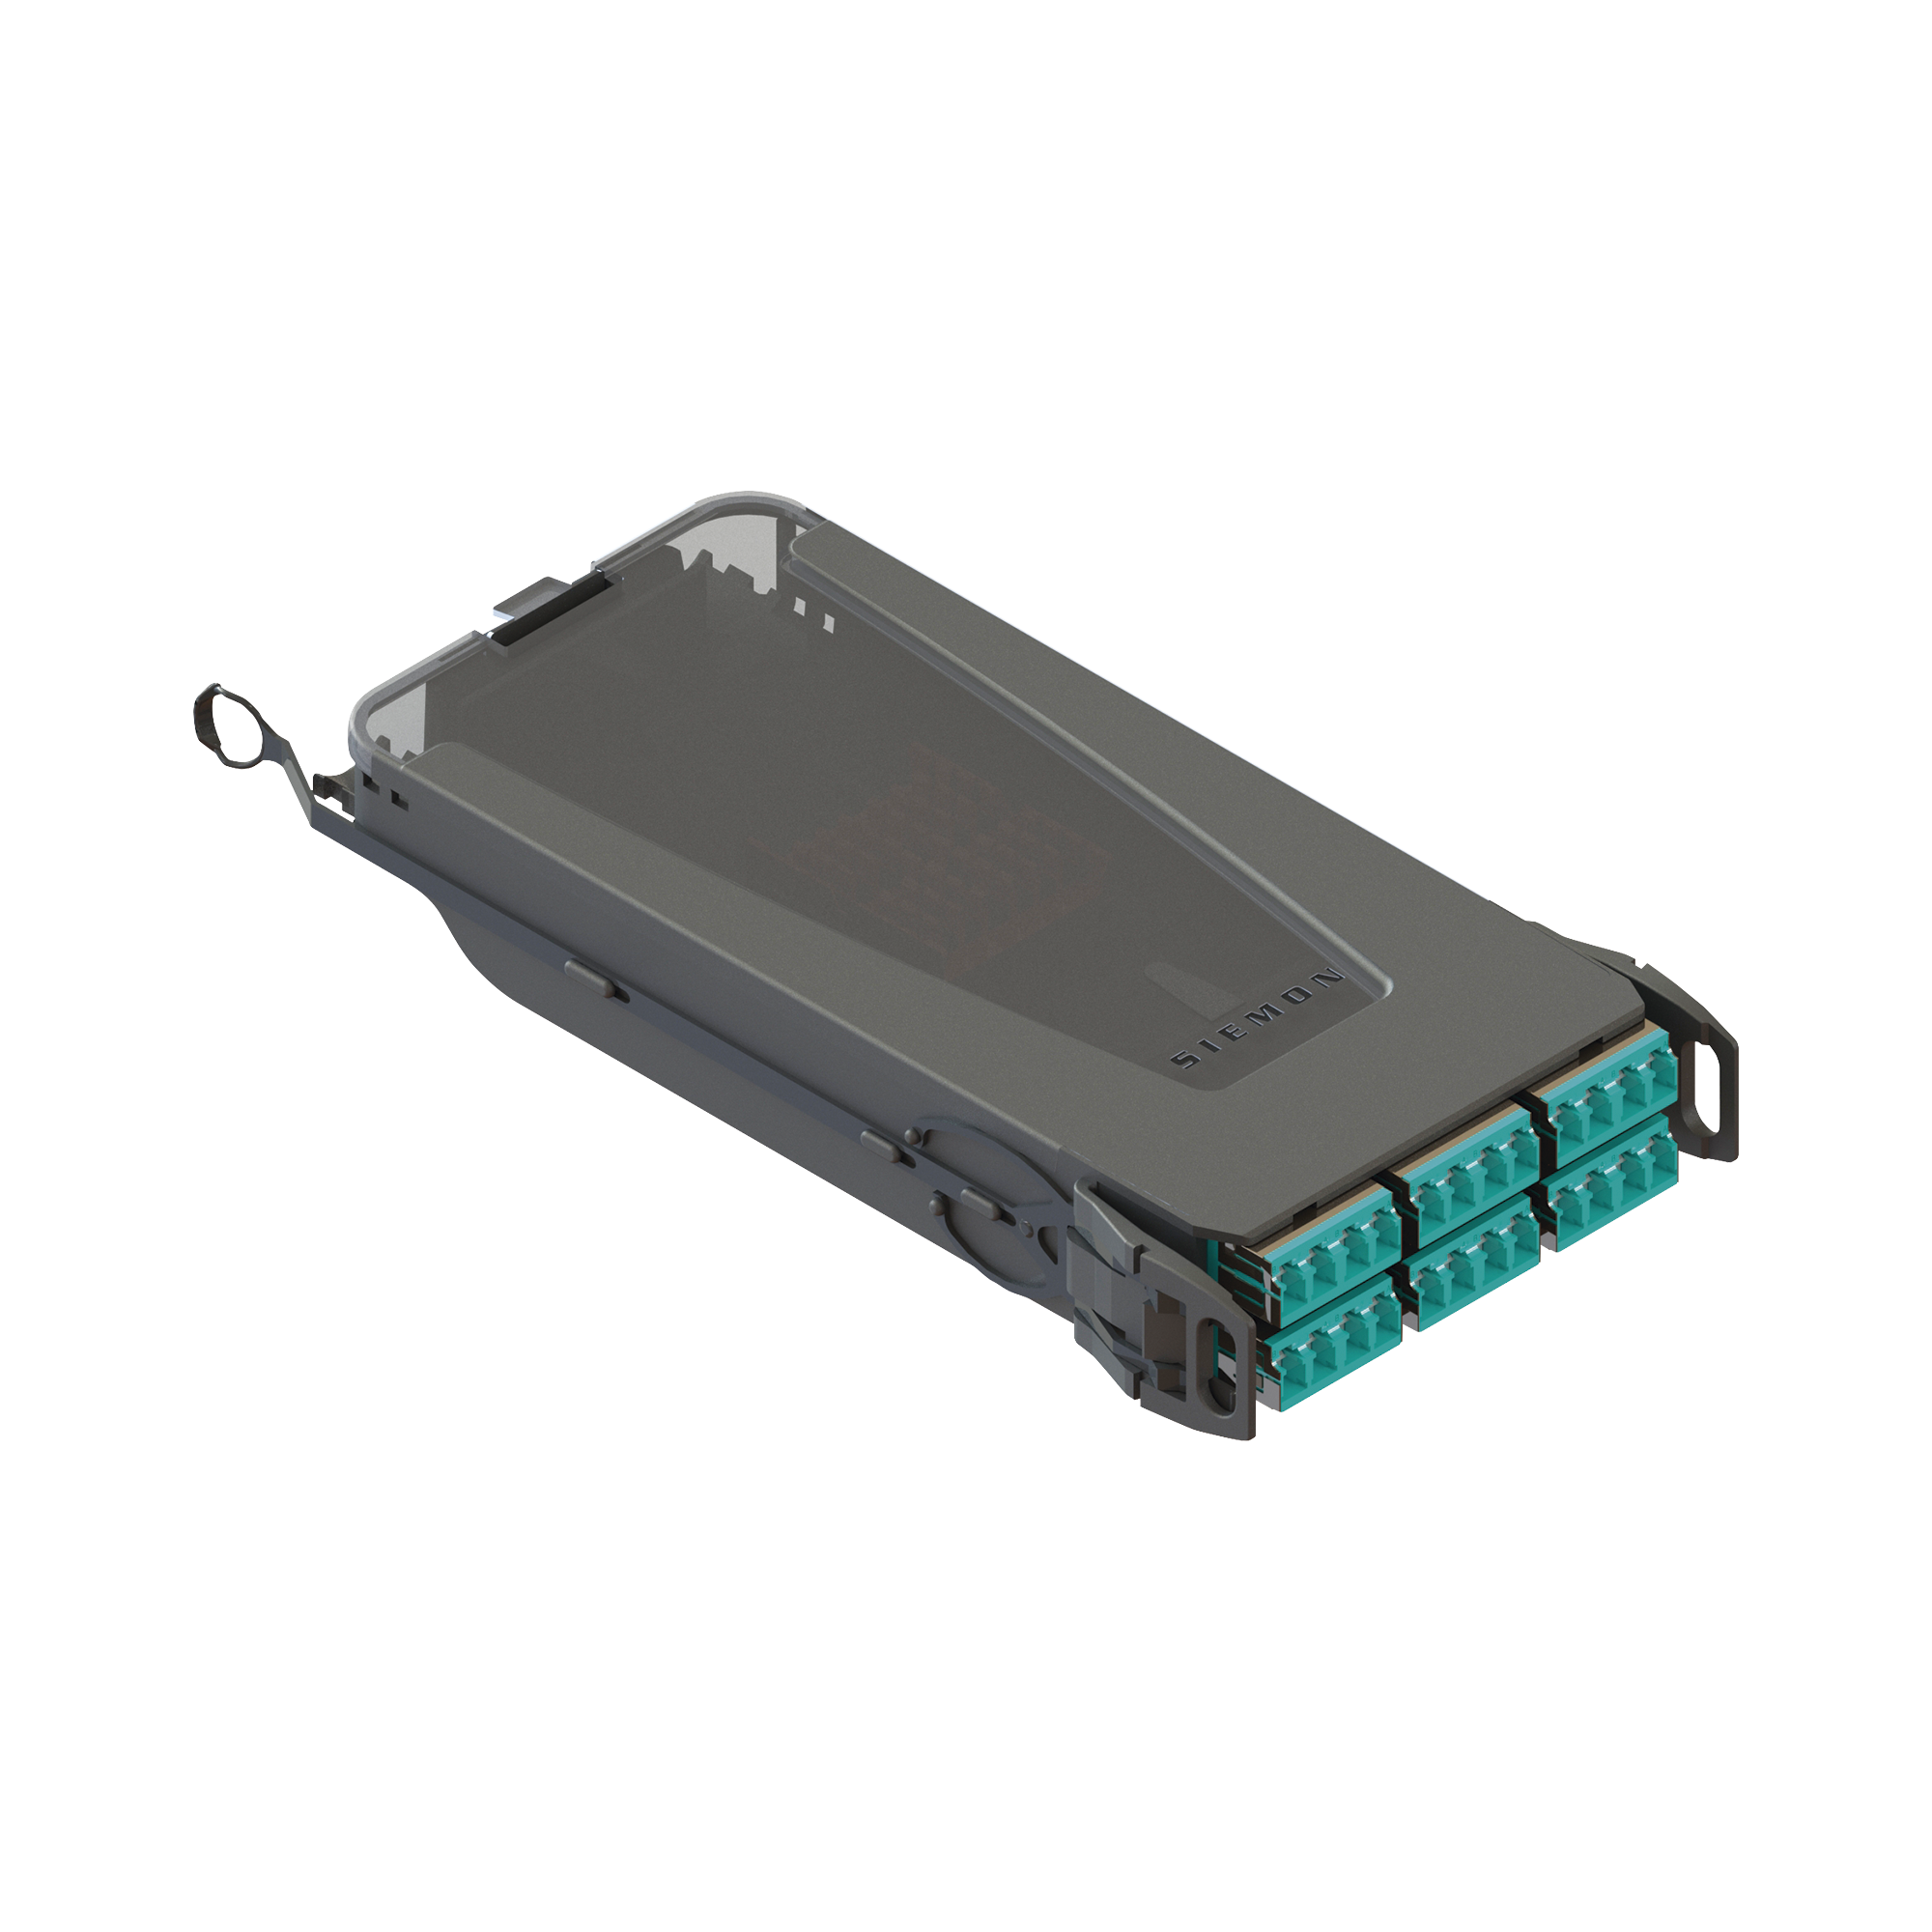 Cassette de empalme LightVerse, Acepta 24 fibras con conectores LC “Shuttered” Para fibra Multimodo Aqua OM4, incluye tapas cubre polvo abatibles integradas por cada conector.